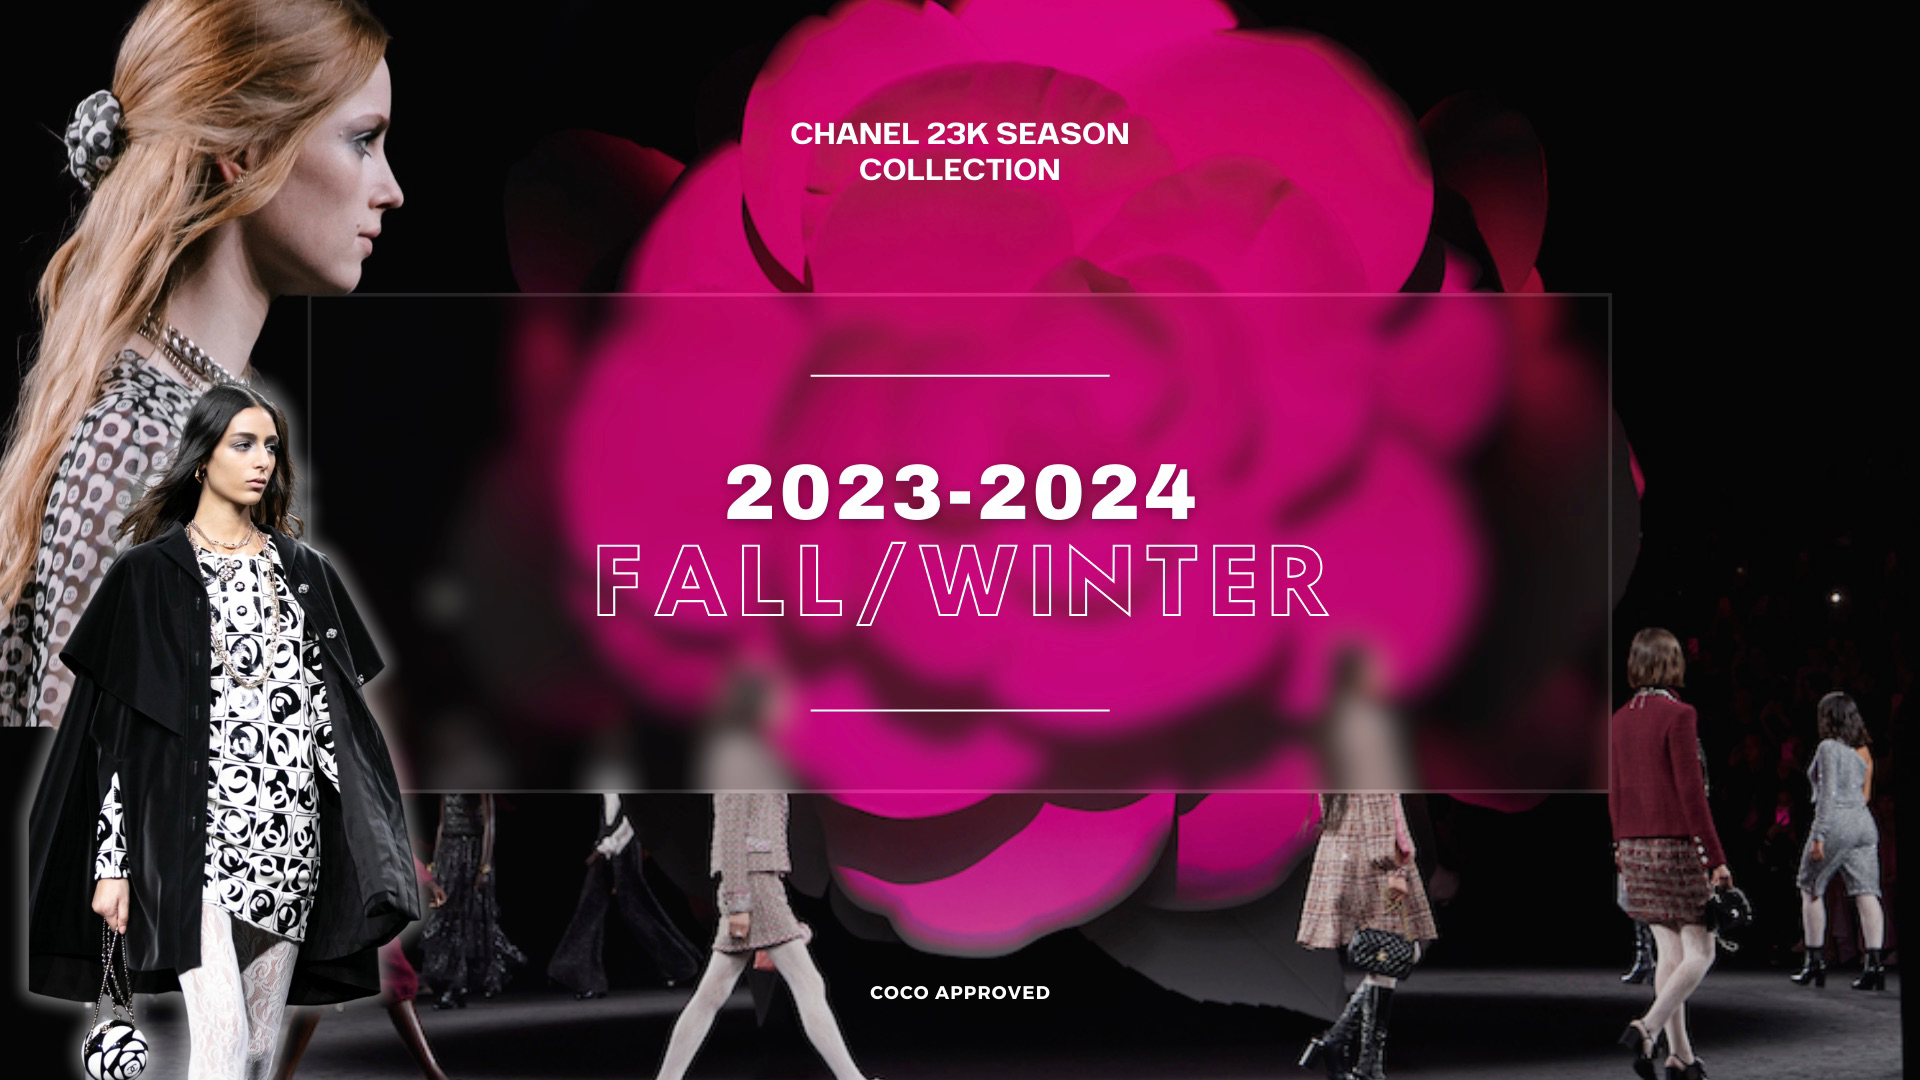 Chanel 2023 New Season Release: Spring-Summer 2023 Ready to Wear